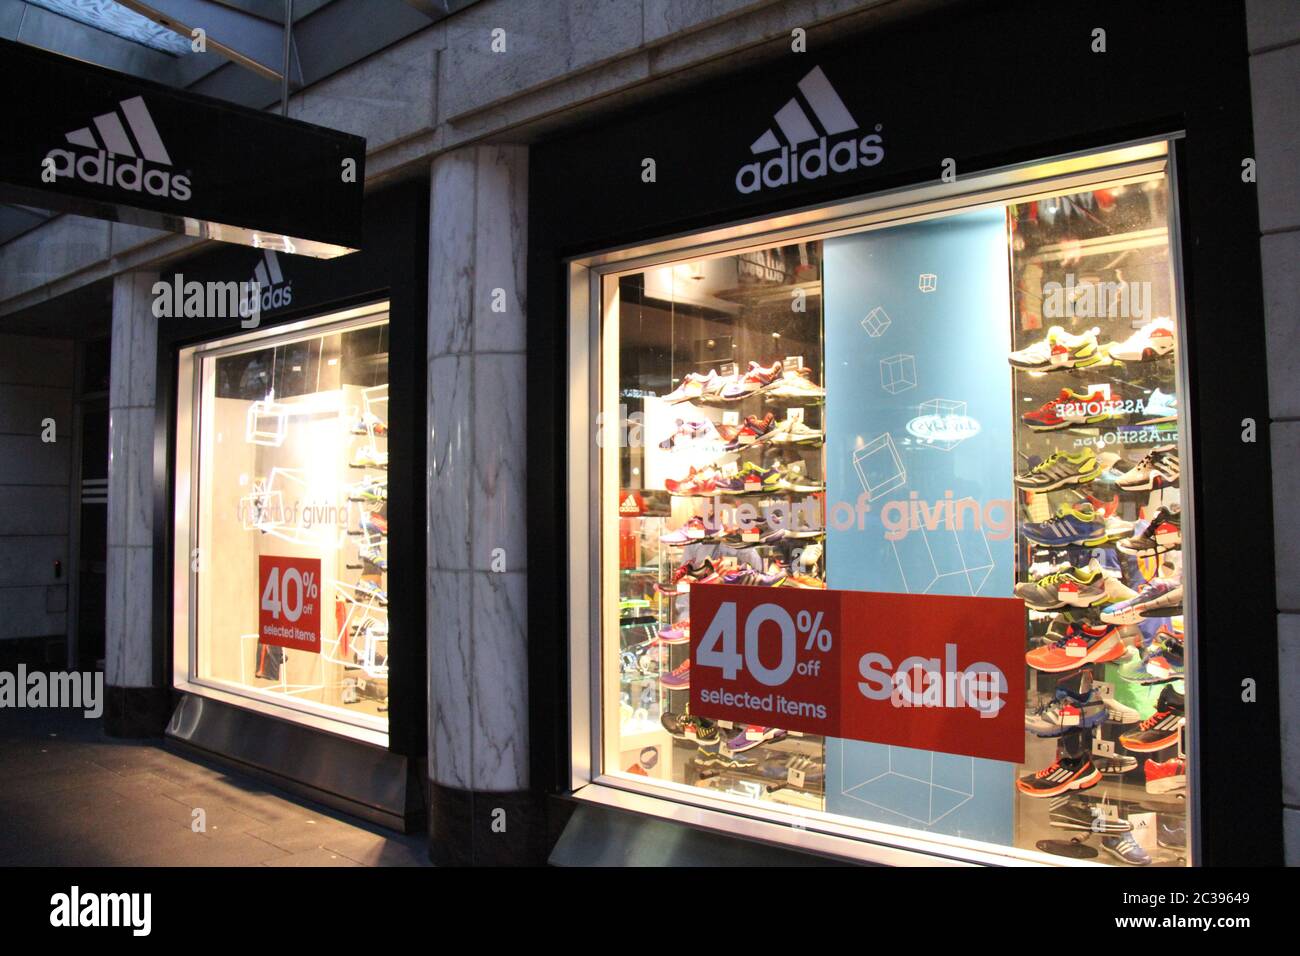 Sale at Adidas, Pitt Street Mall in Sydney, Photo - Alamy